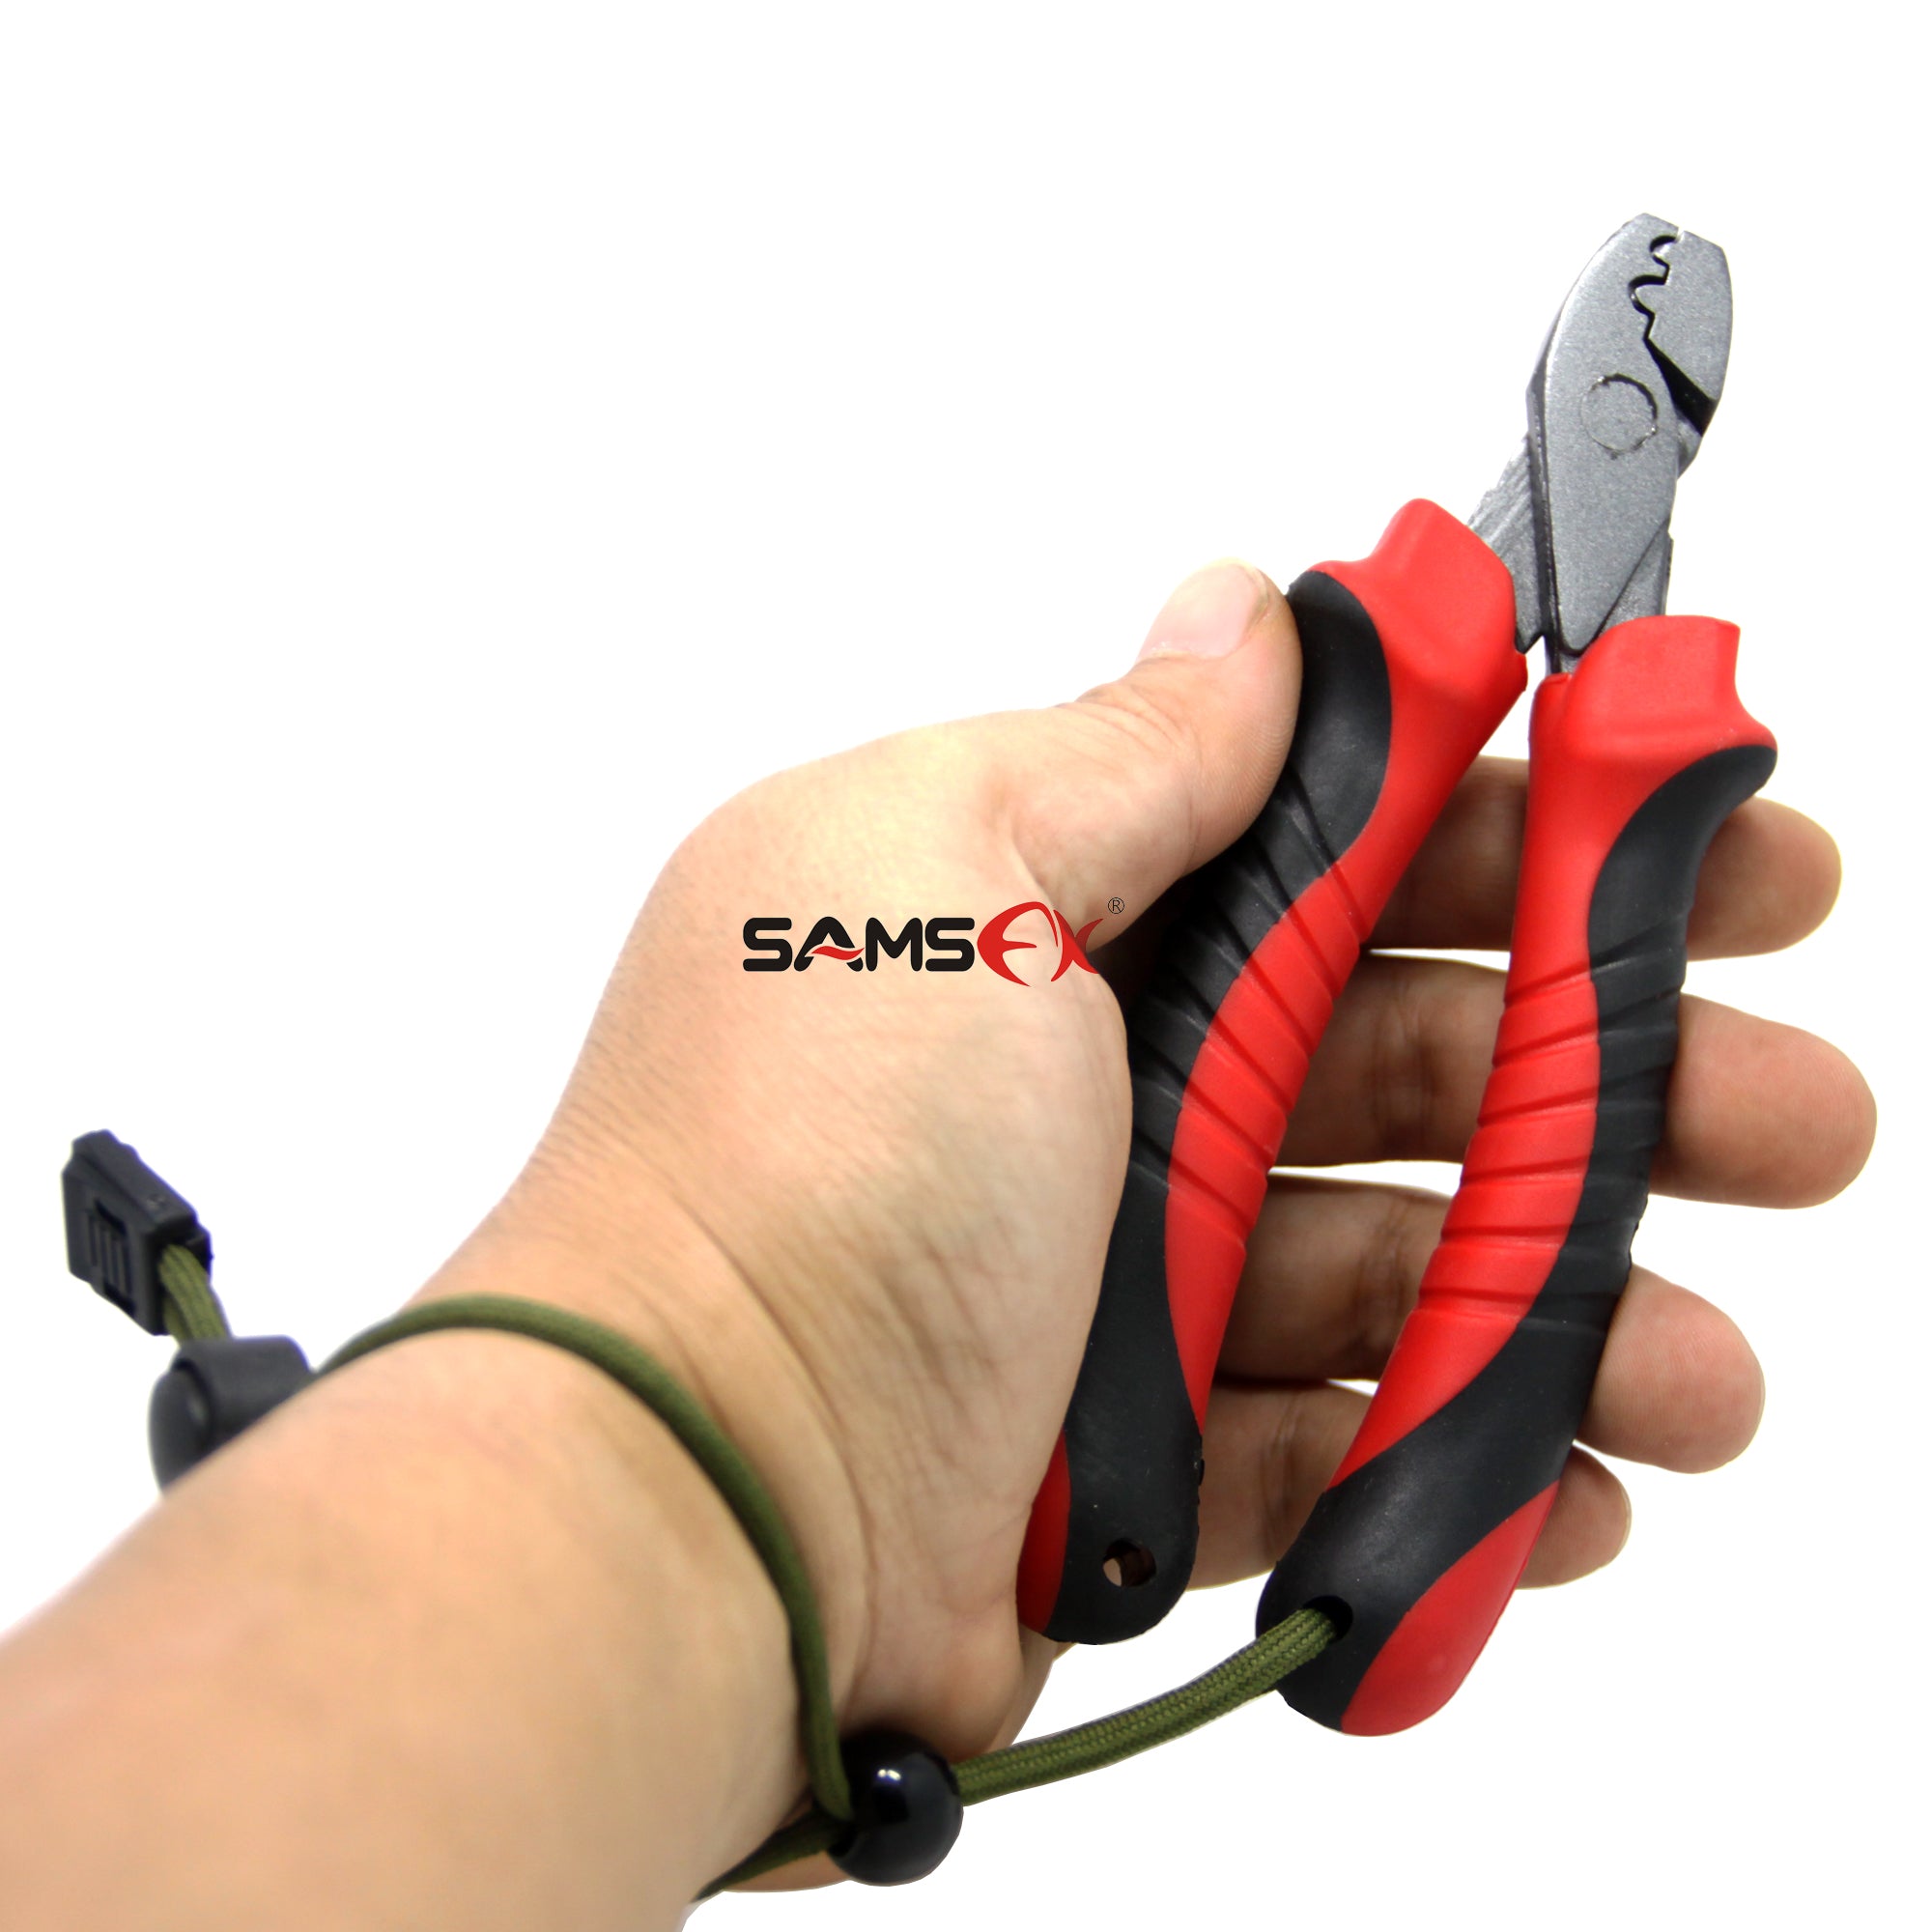 SAMSFX Forged Steel Hand Crimper Tool Fishing Wire Leader Crimping Pli –  samsfxfishing